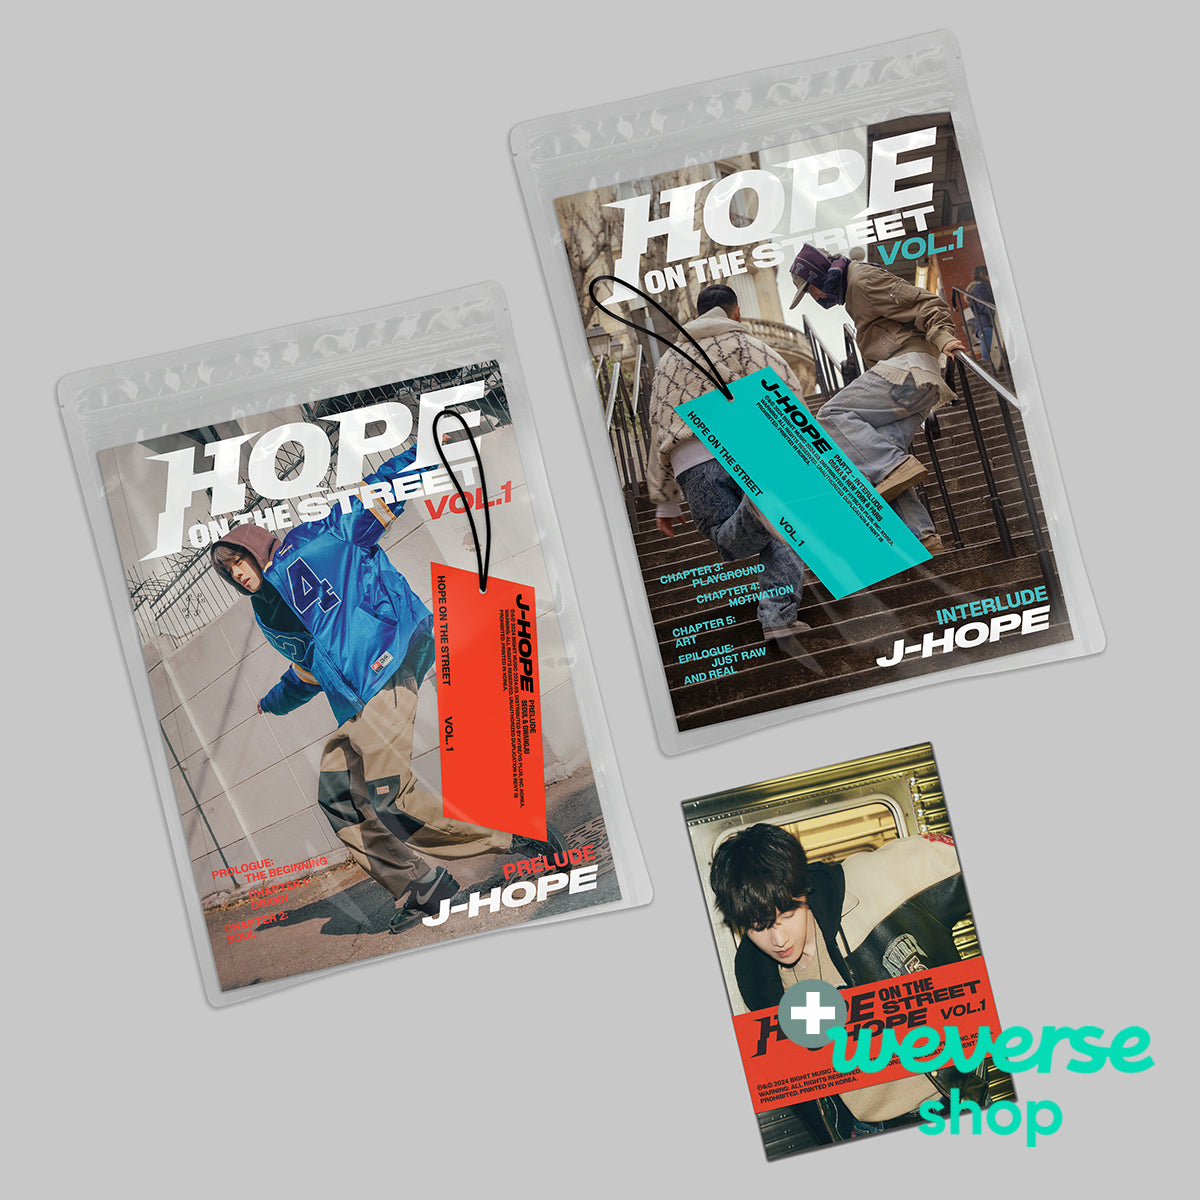 j-hope (BTS) - HOPE ON THE STREET VOL.1 (FULL SET (Standard ver. + Weverse Albums ver.)) + Weverse Shop P.O.B